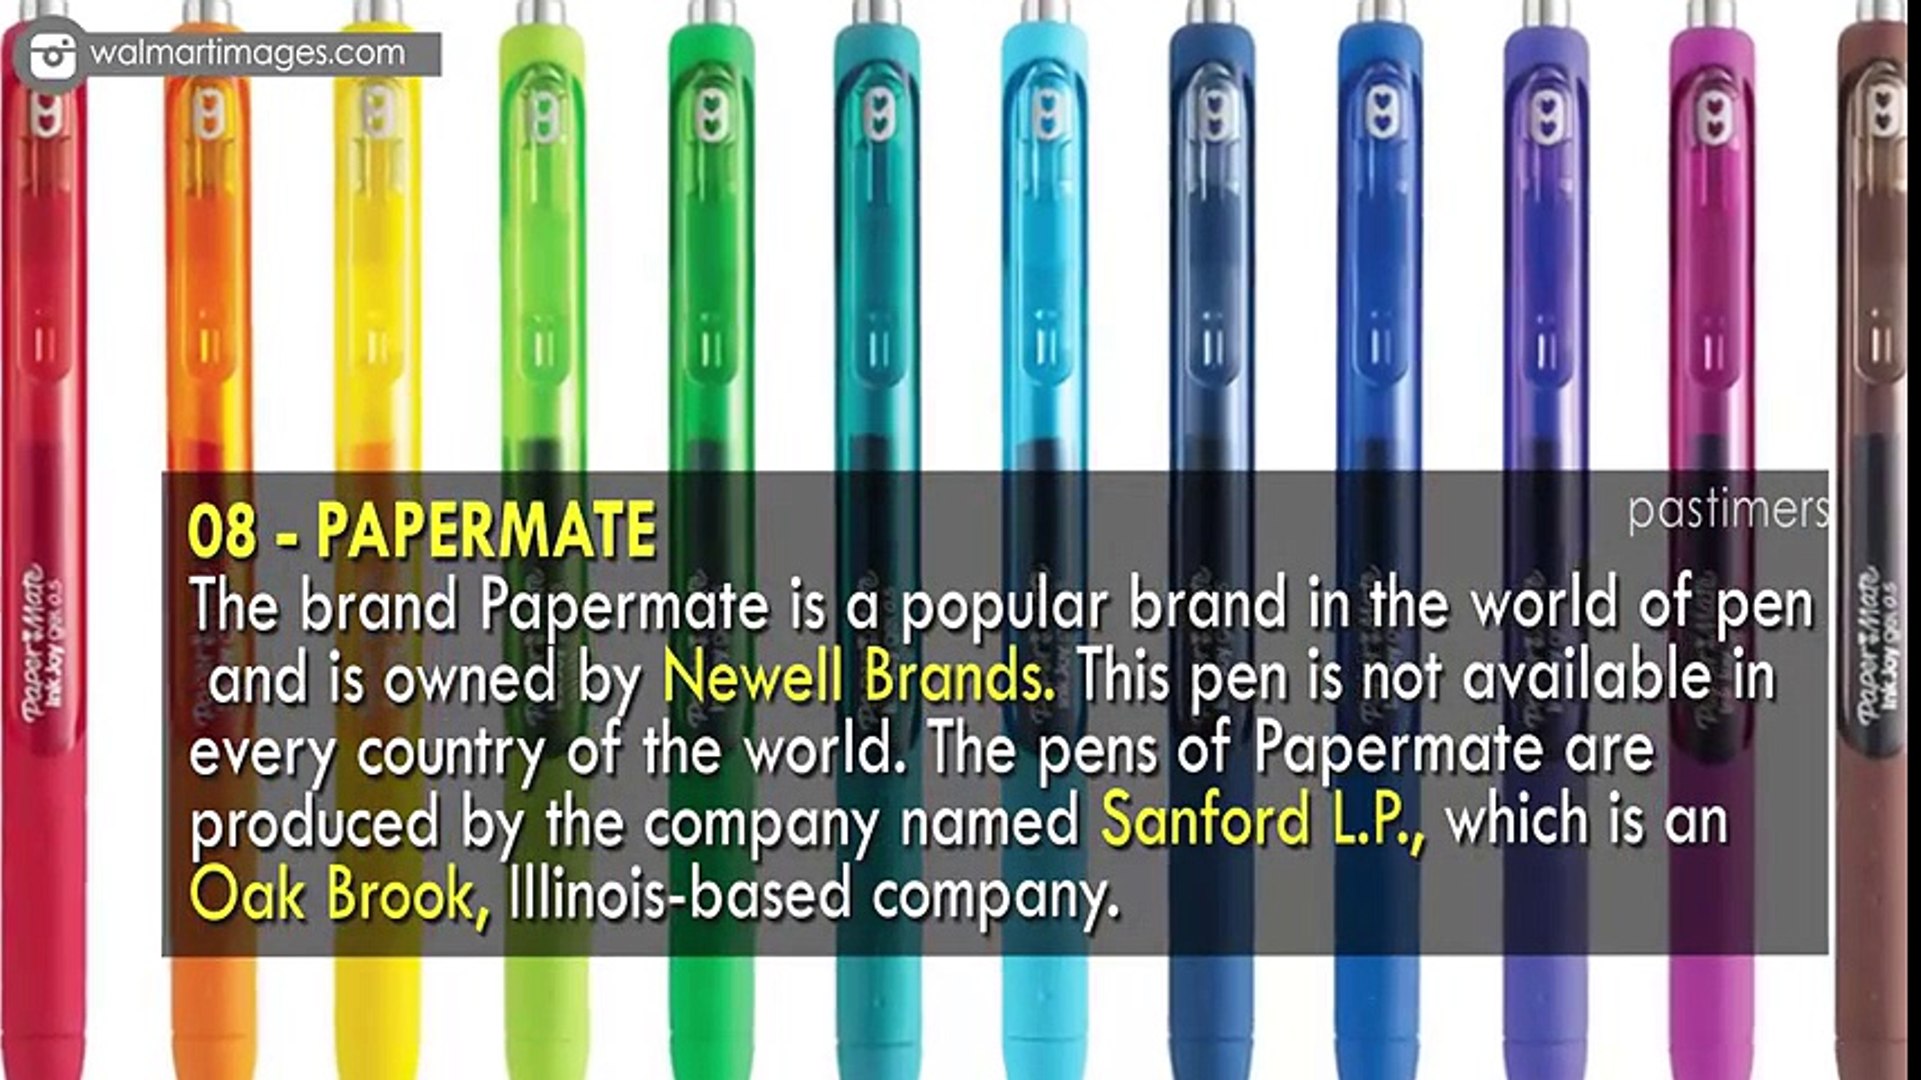 Top 10 Pen Brands in the World